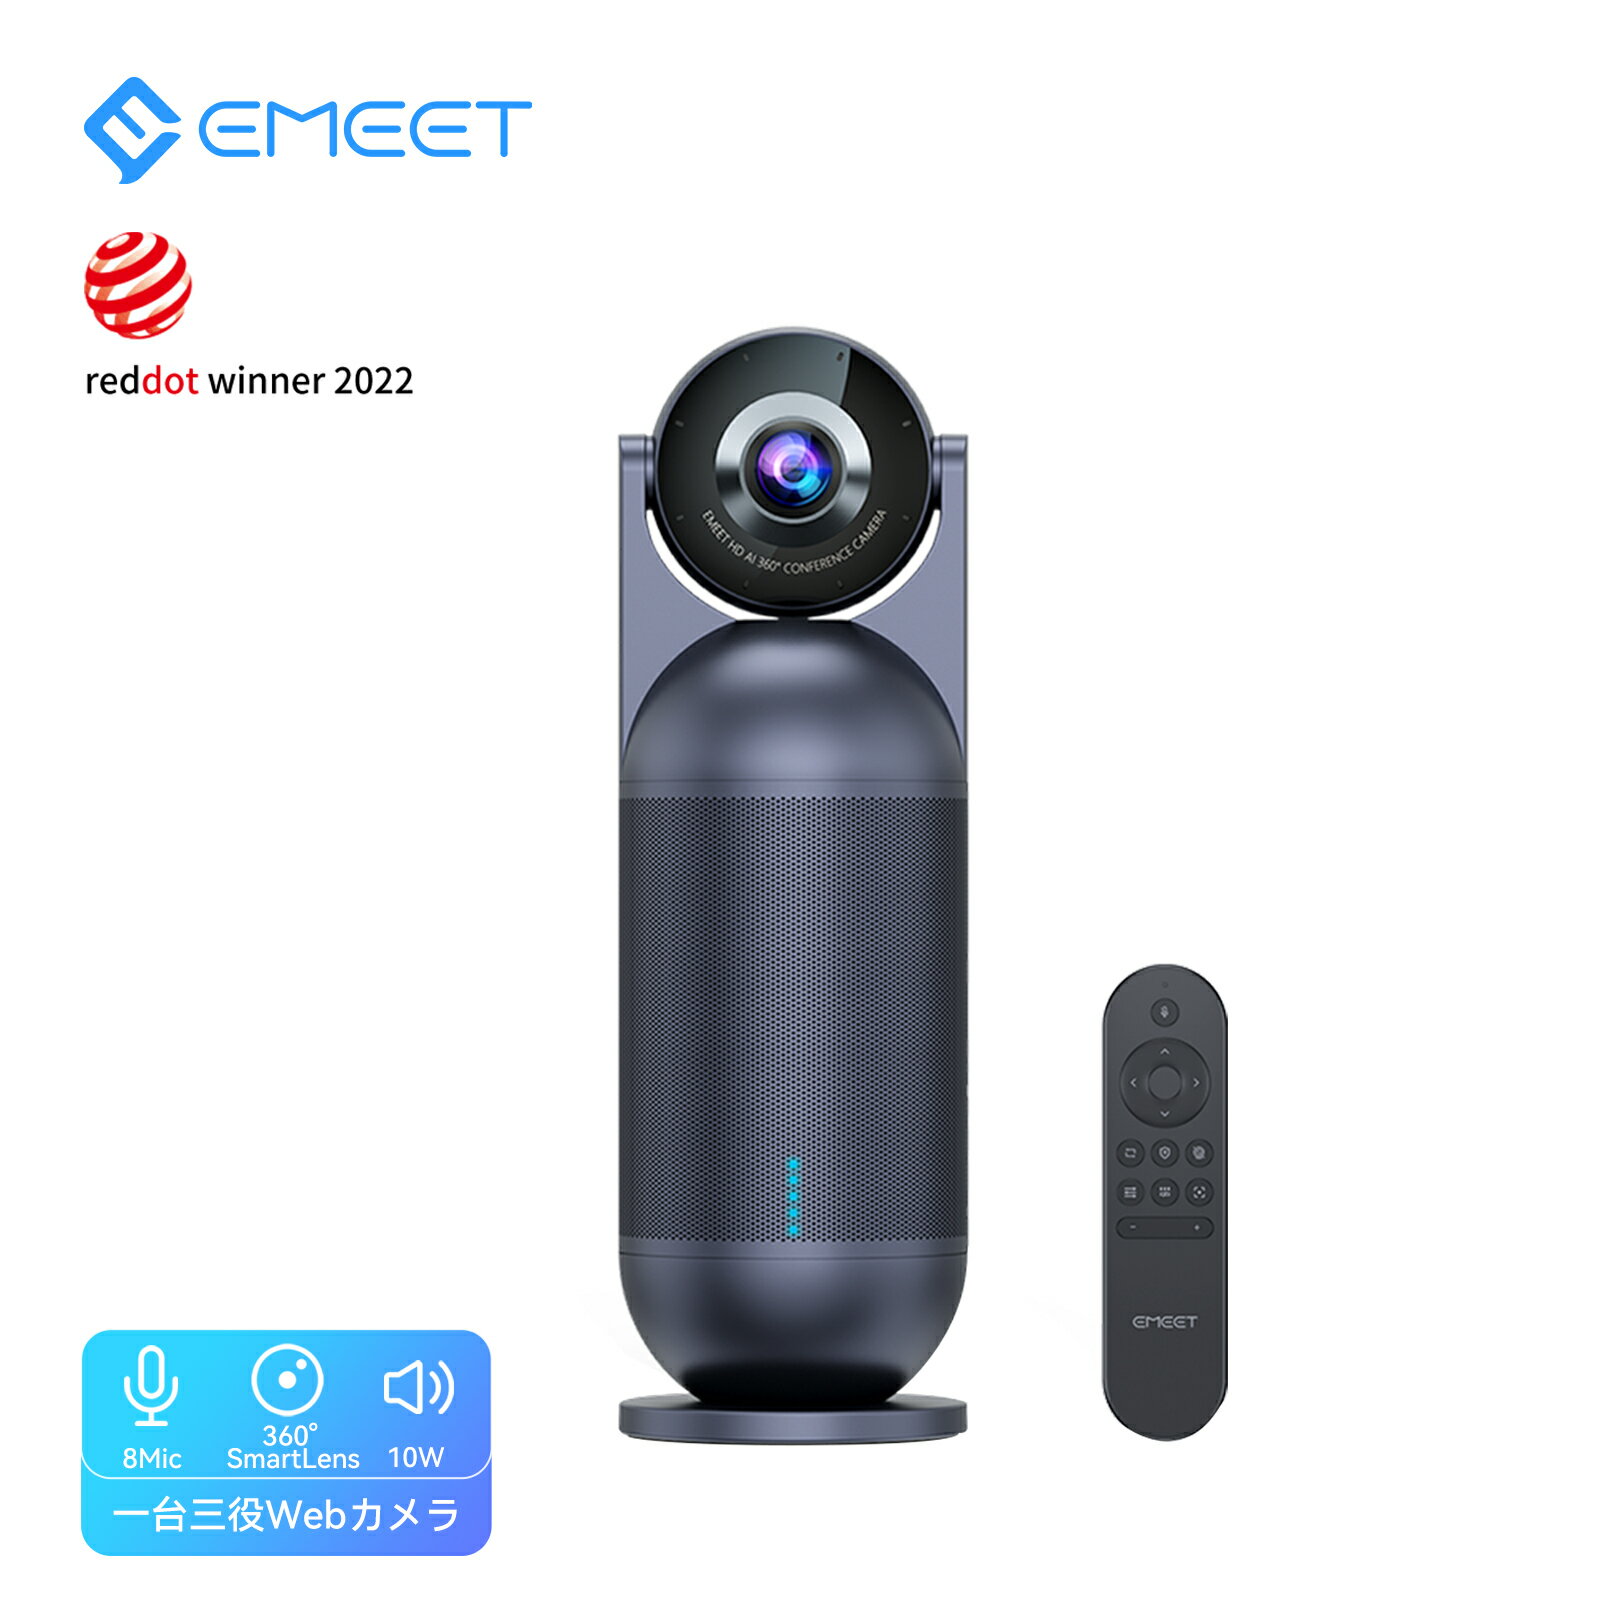 EMEET ウェブカメラ 会議用 360度AI自動フォーカスカメラ HD1080P 8つの全指向性マイク 10Wスピーカー搭載 大音量 1台3役 5つの会議モード付き ノイズキャンセリング 双方向通話 ZOOM SKYPE LINE対応 レッドドットアワード受賞